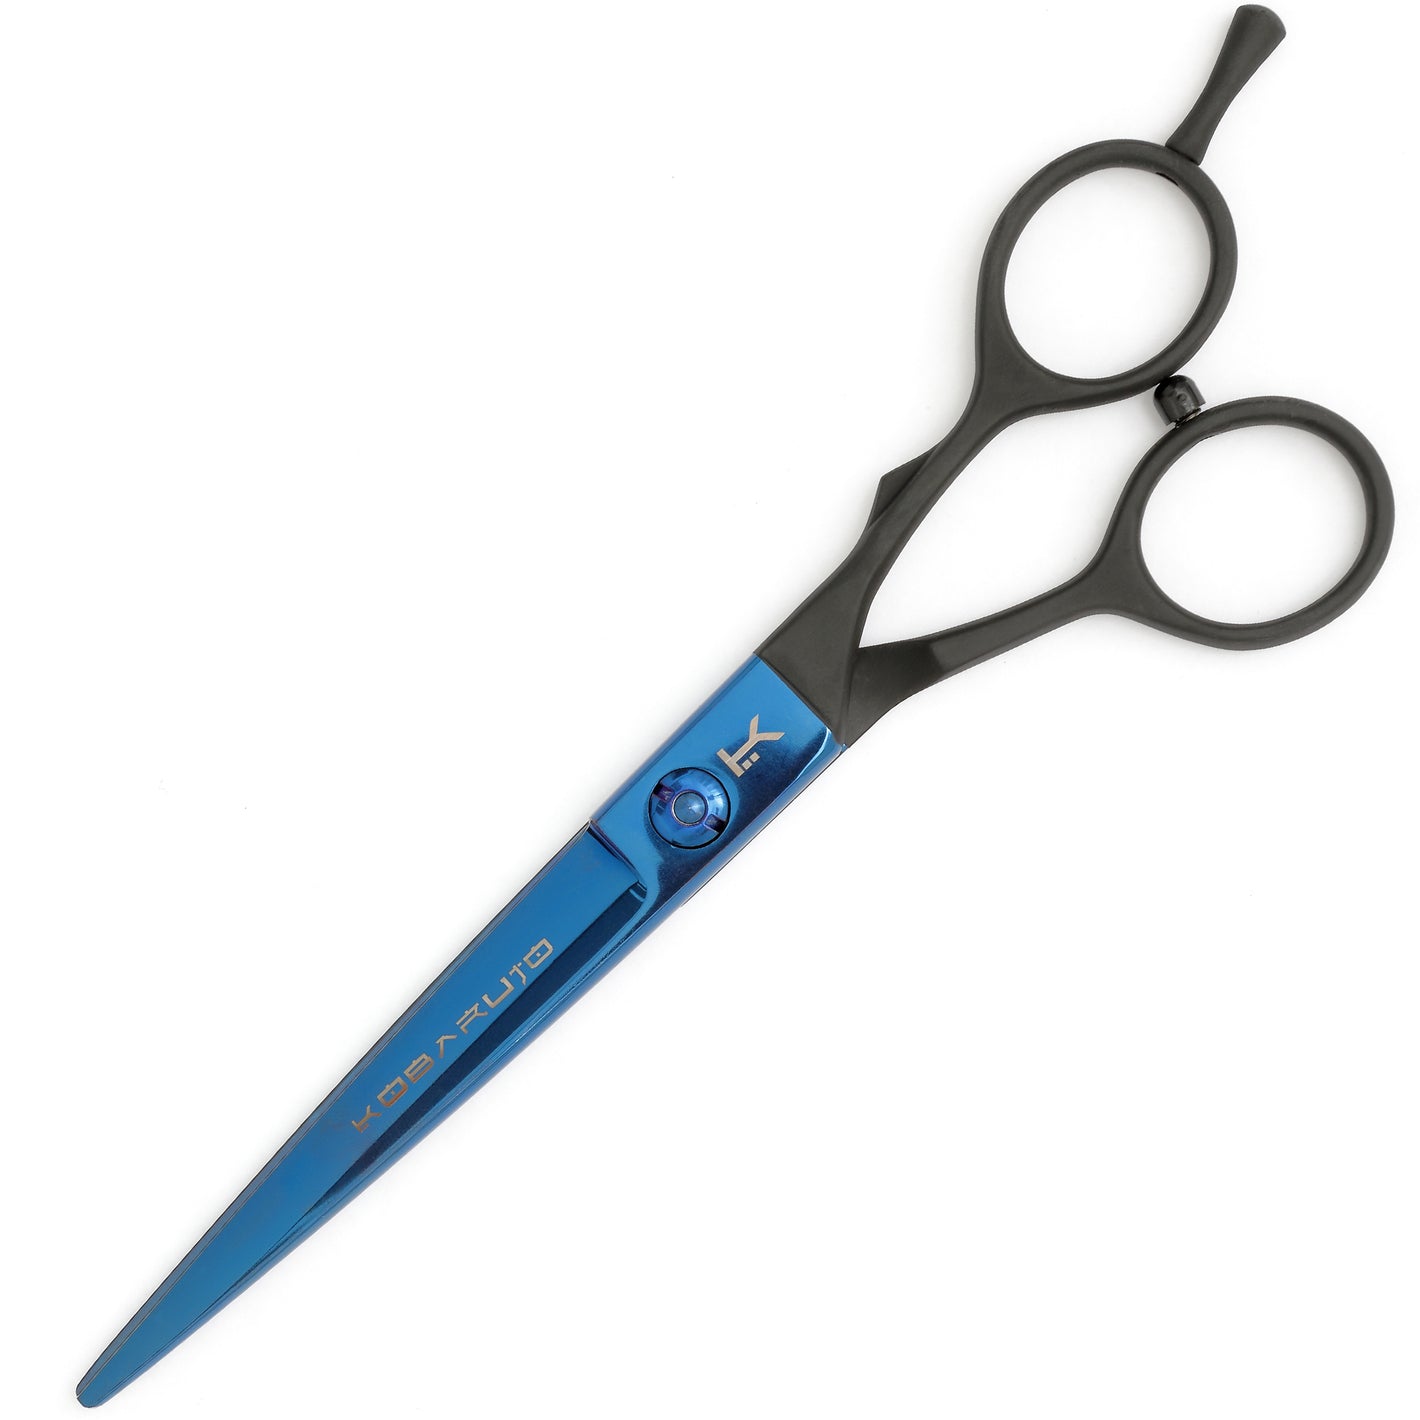 6.5 inch blue cobalt hair scissors